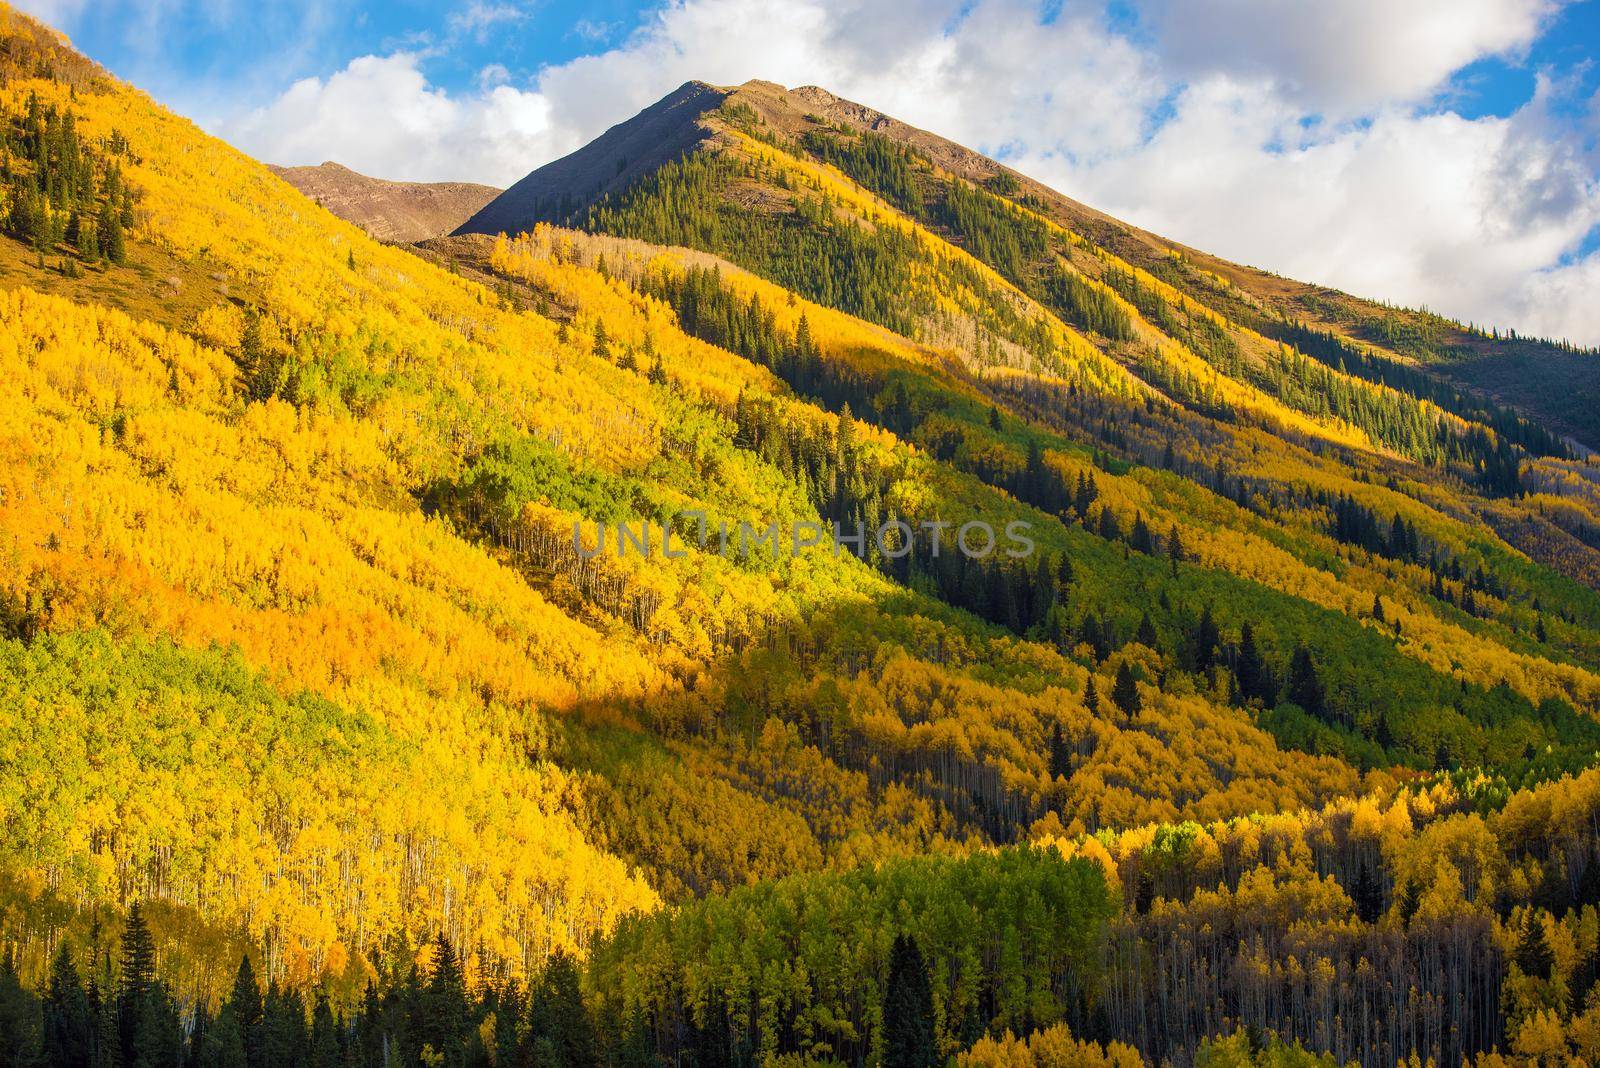 Fall Hills of Colorado. Yellow Aspen Trees Forest near Aspen, Colorado, USA